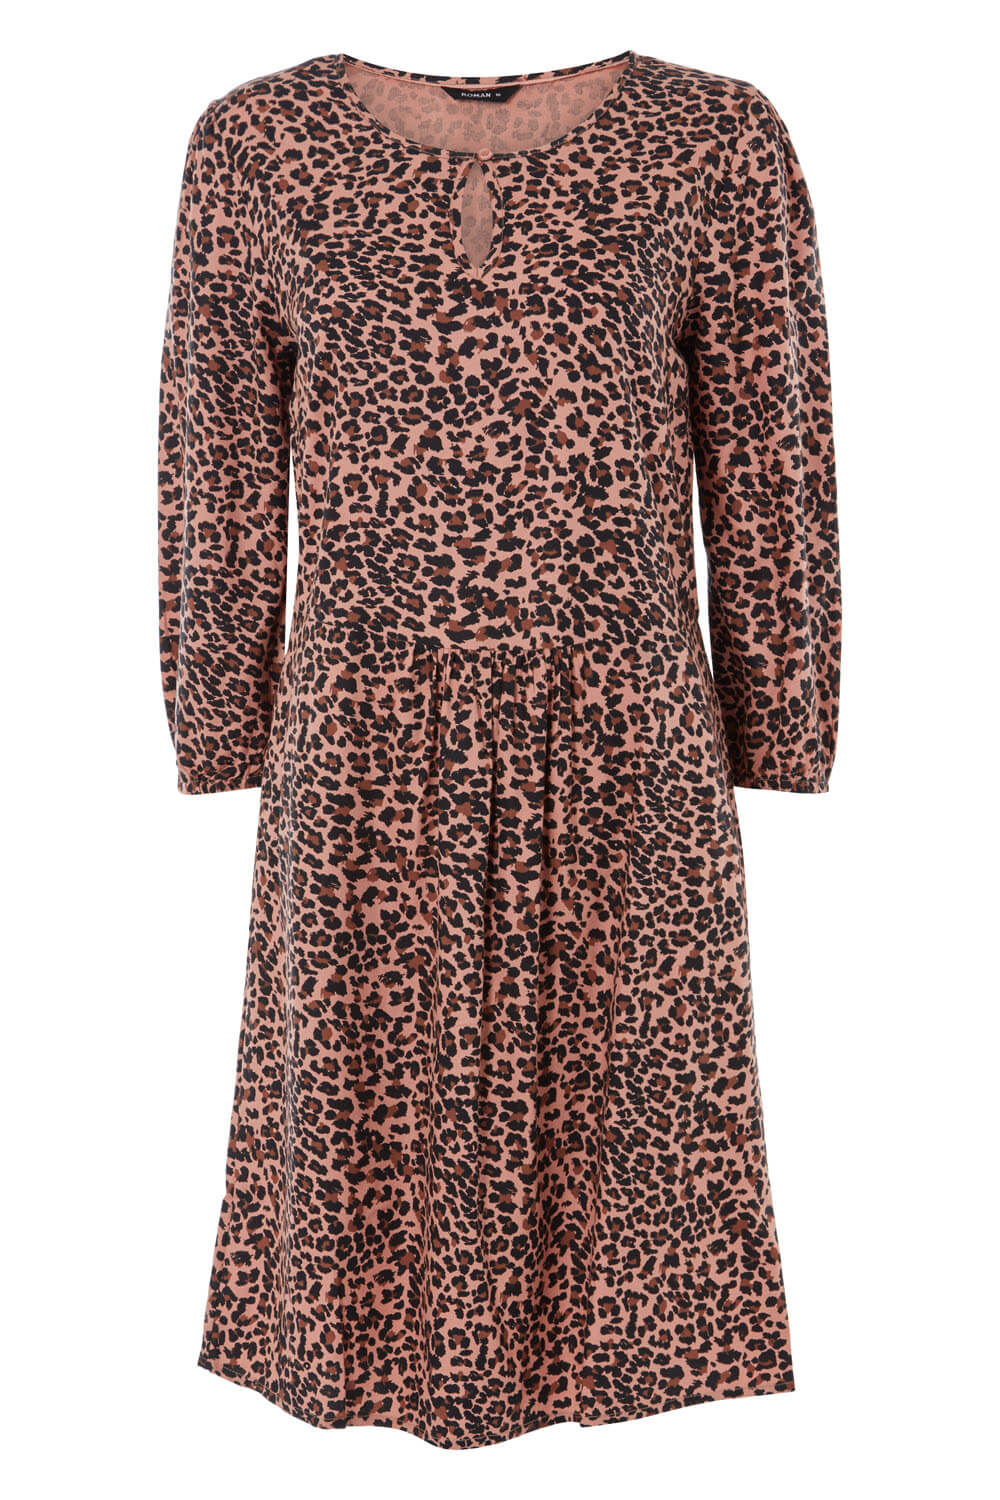 PINK Animal Print 3/4 Sleeve Tunic Dress, Image 4 of 4